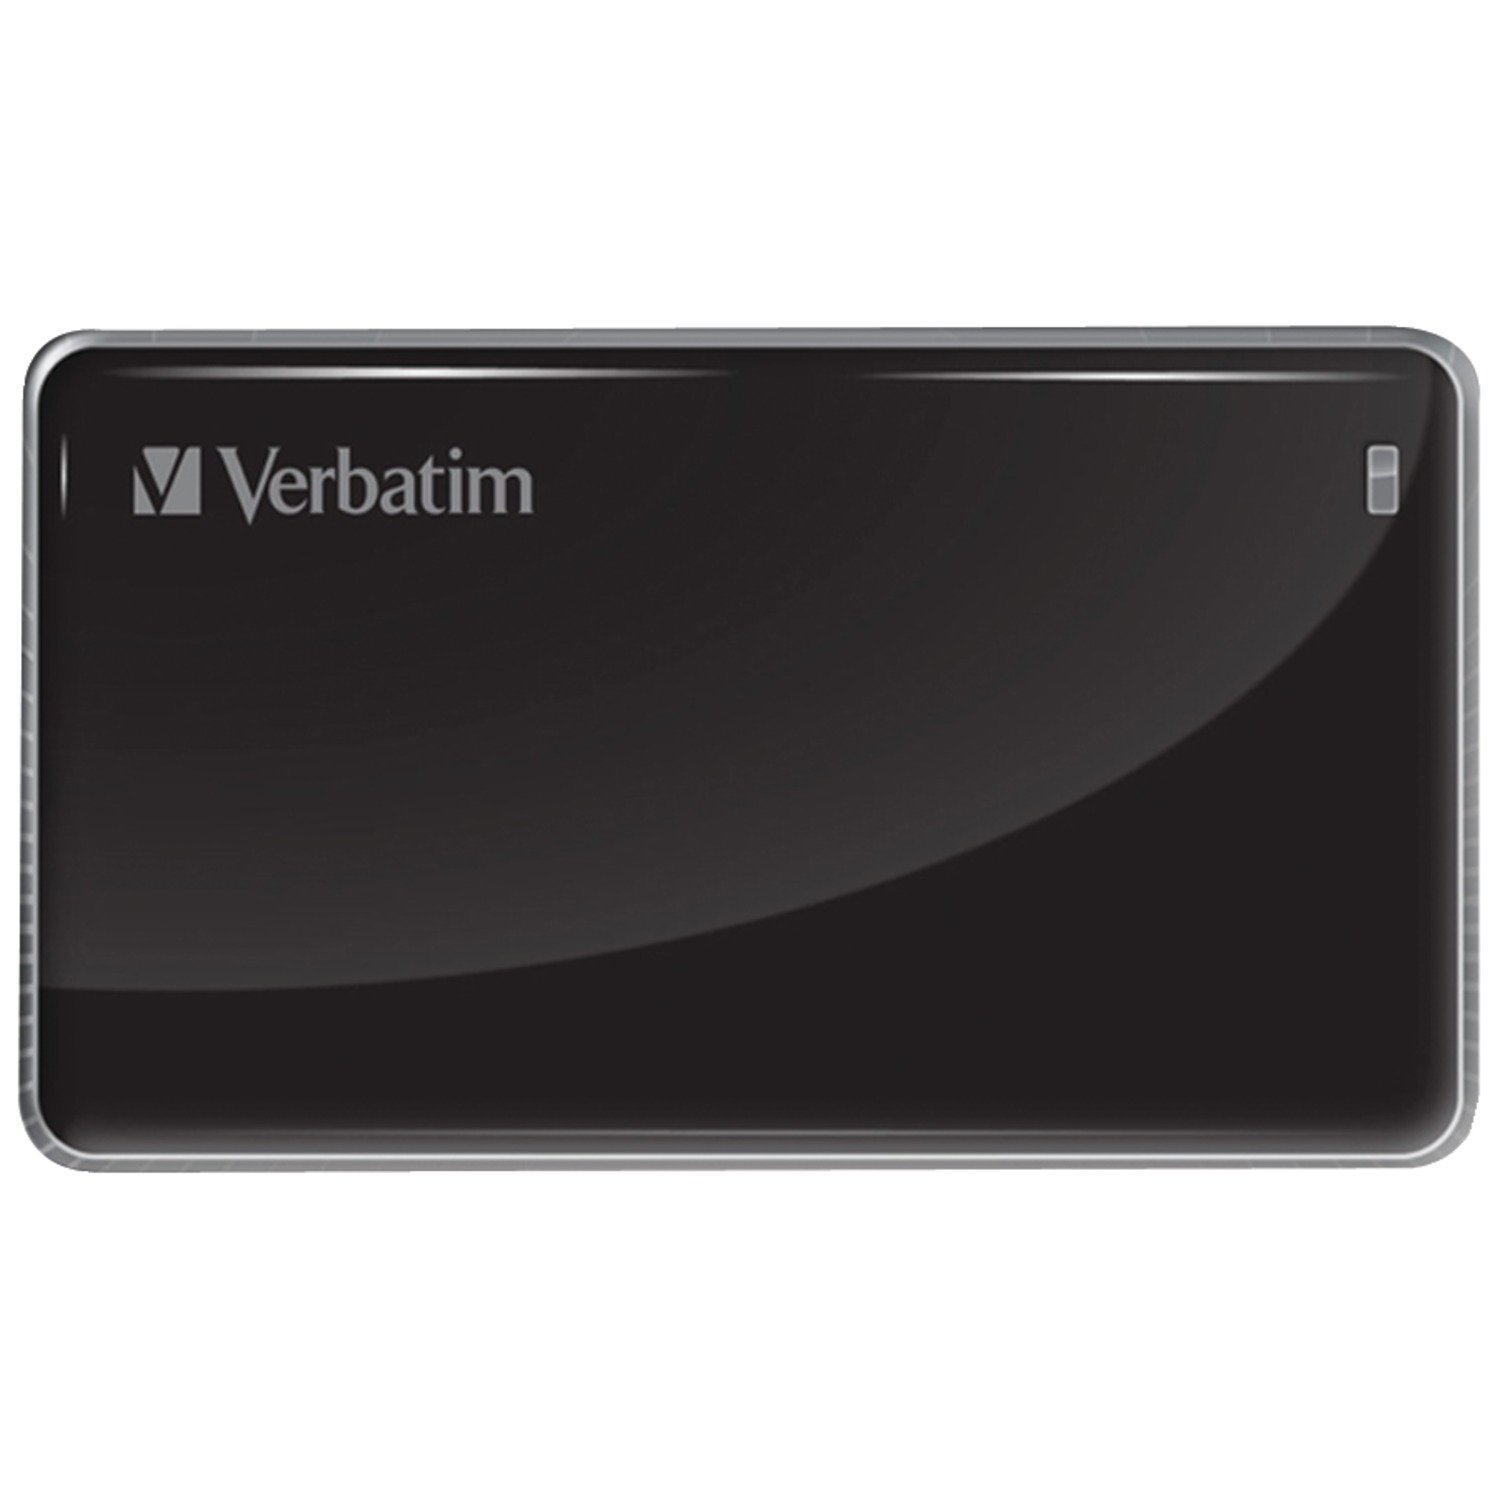 Verbatim威寶 Store 'n' Go 128 GB USB 3.0 外接固態硬碟 $119.99免運費